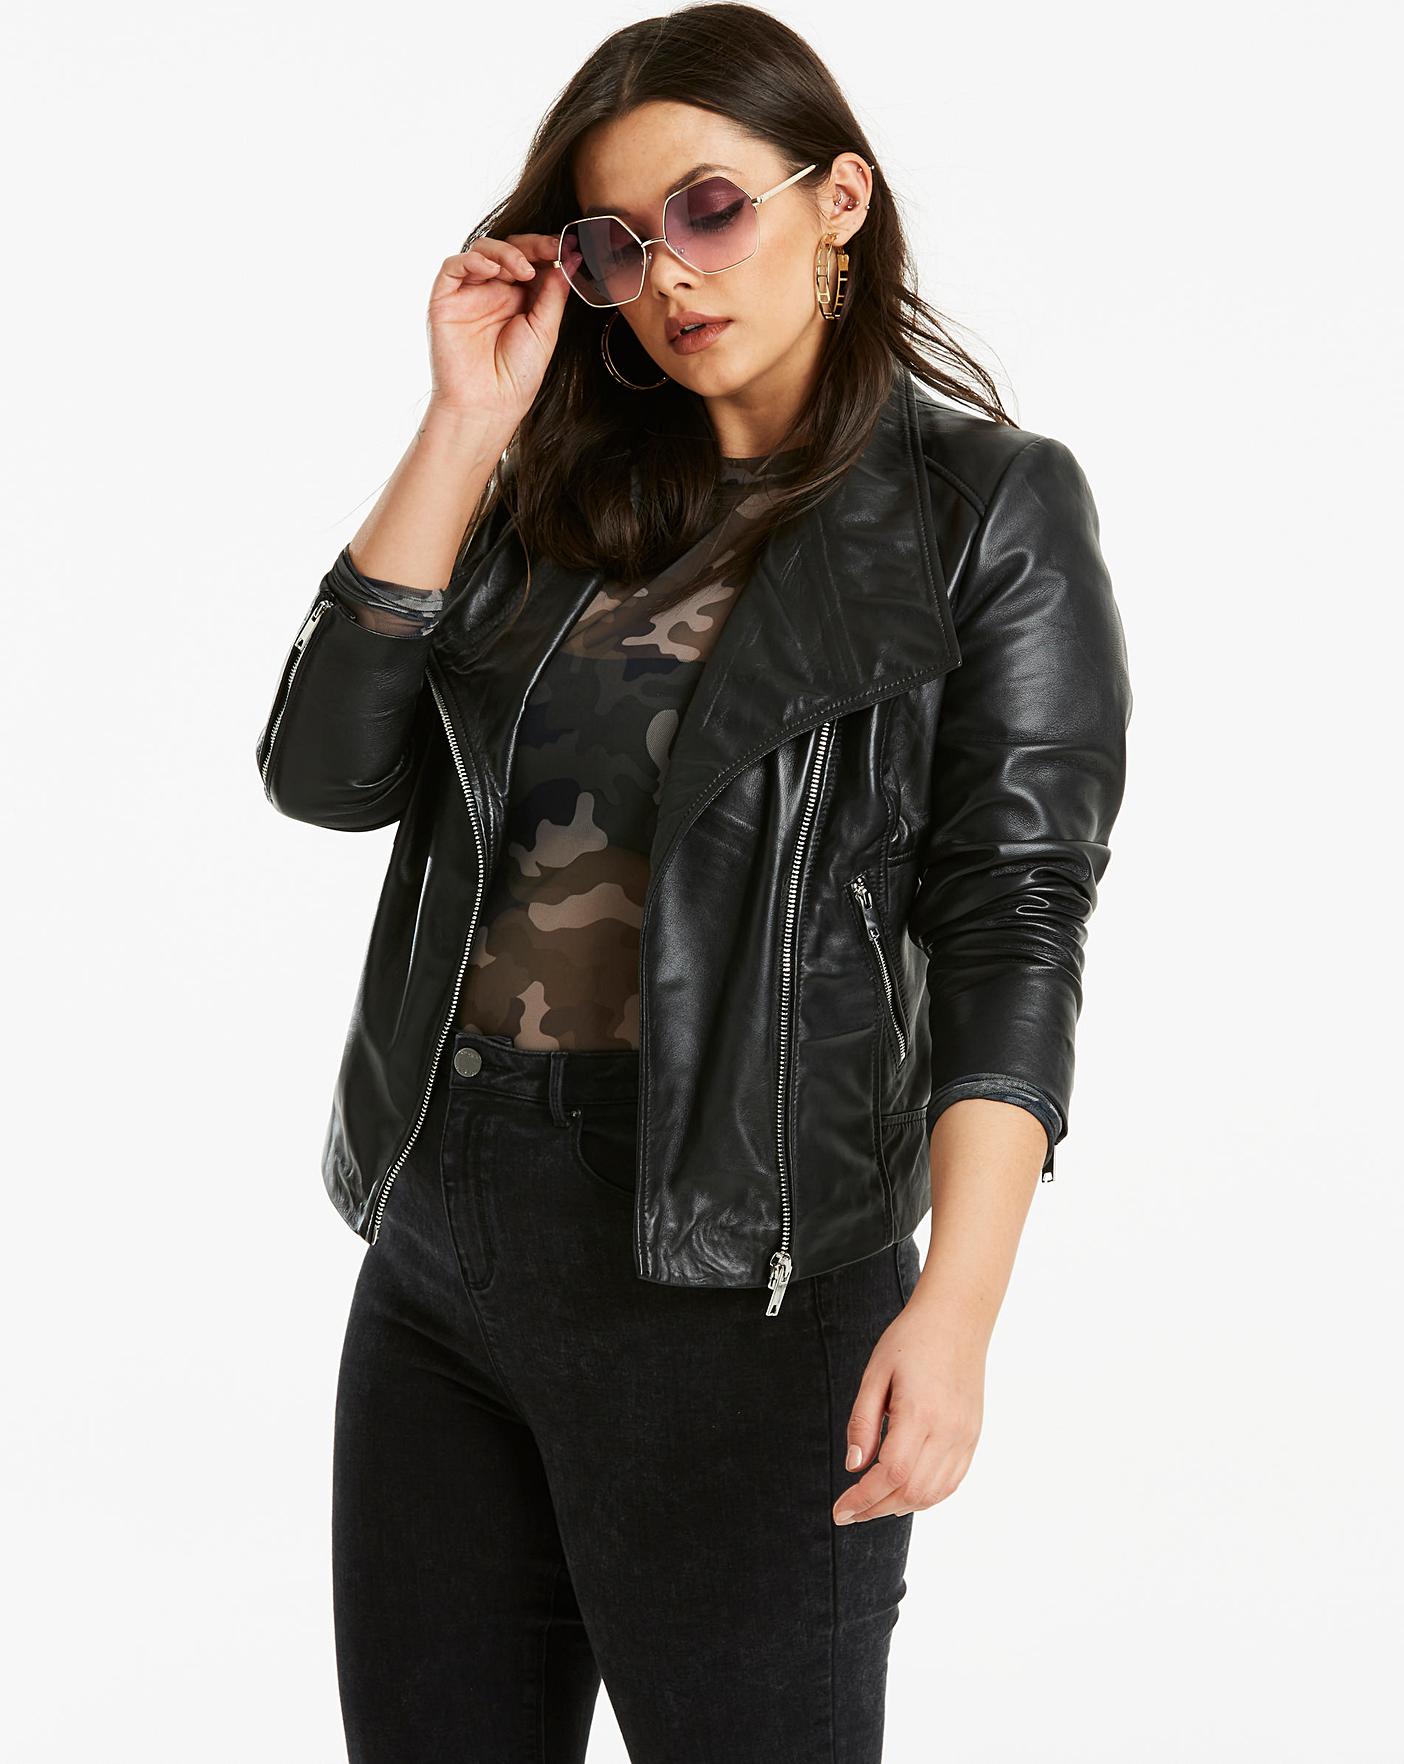 Joanna Hope Leather Jacket | Simply Be